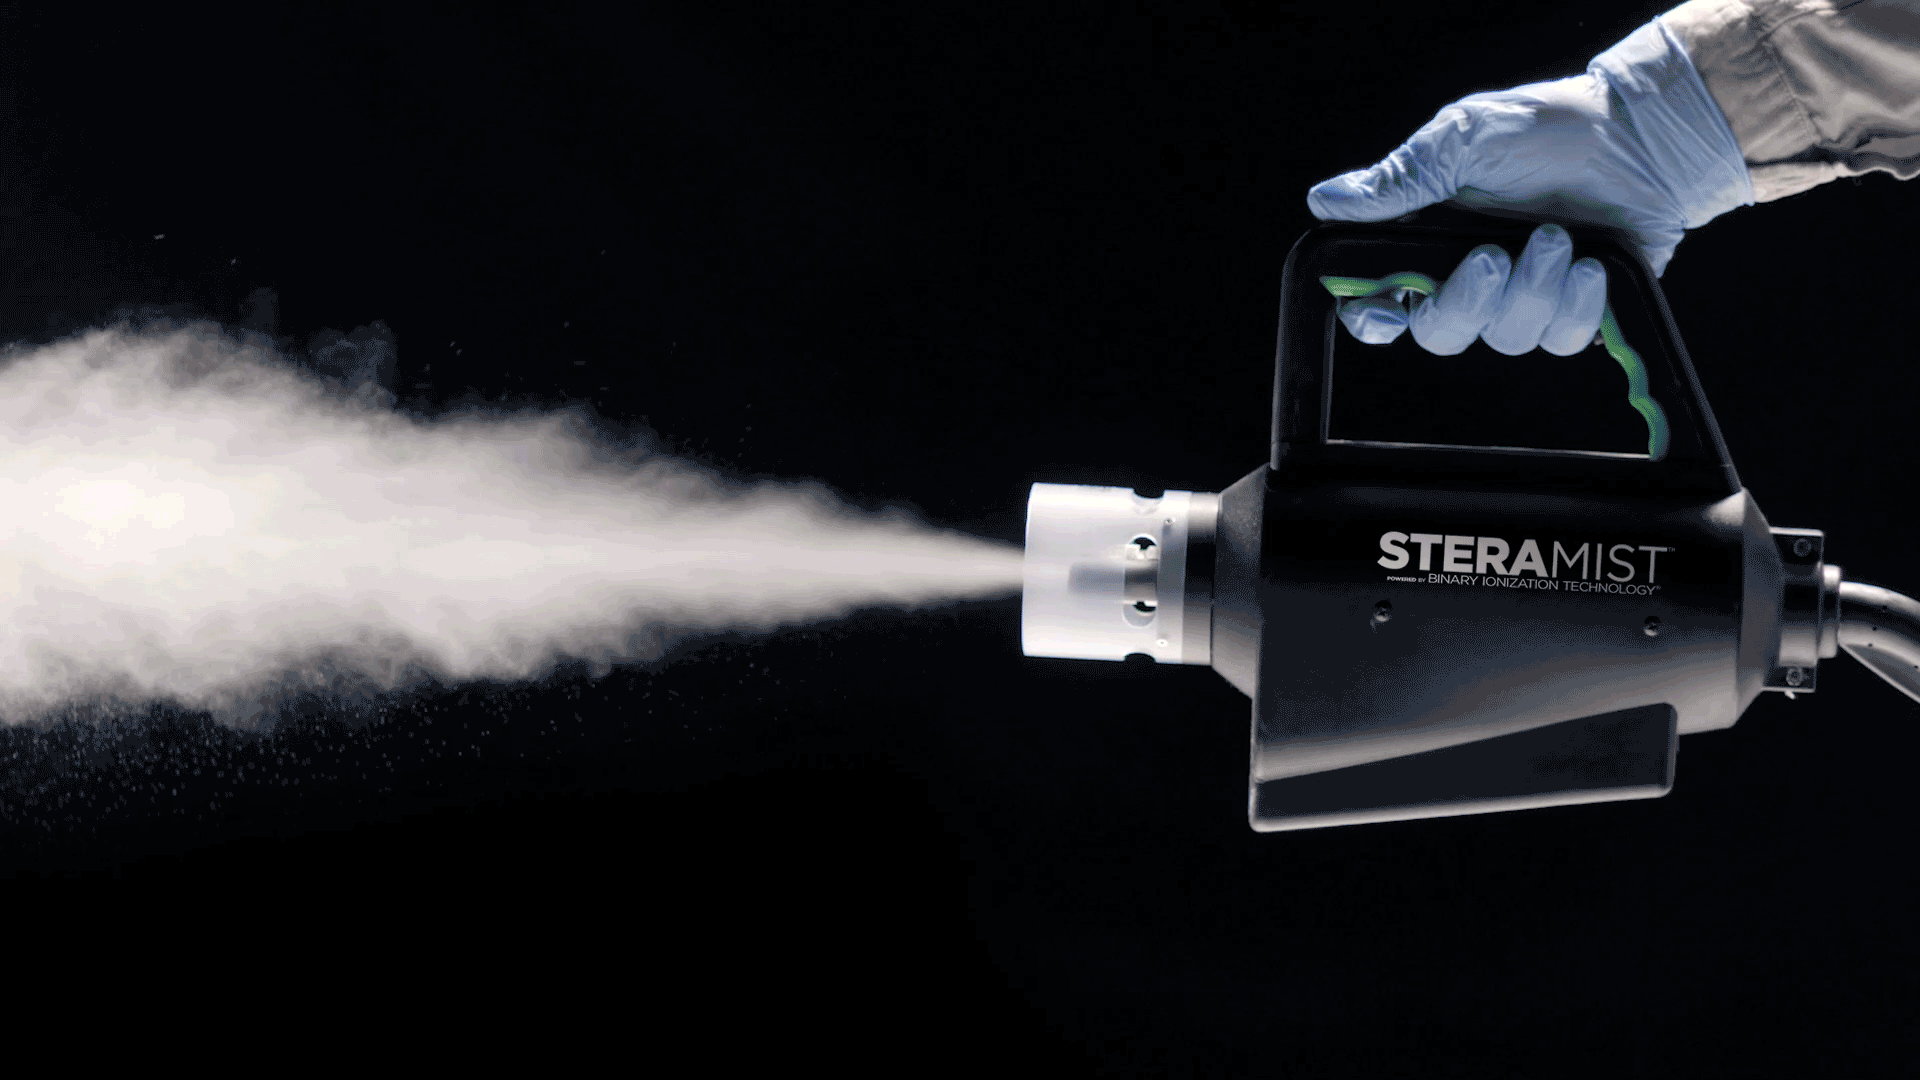 Steramist spraying